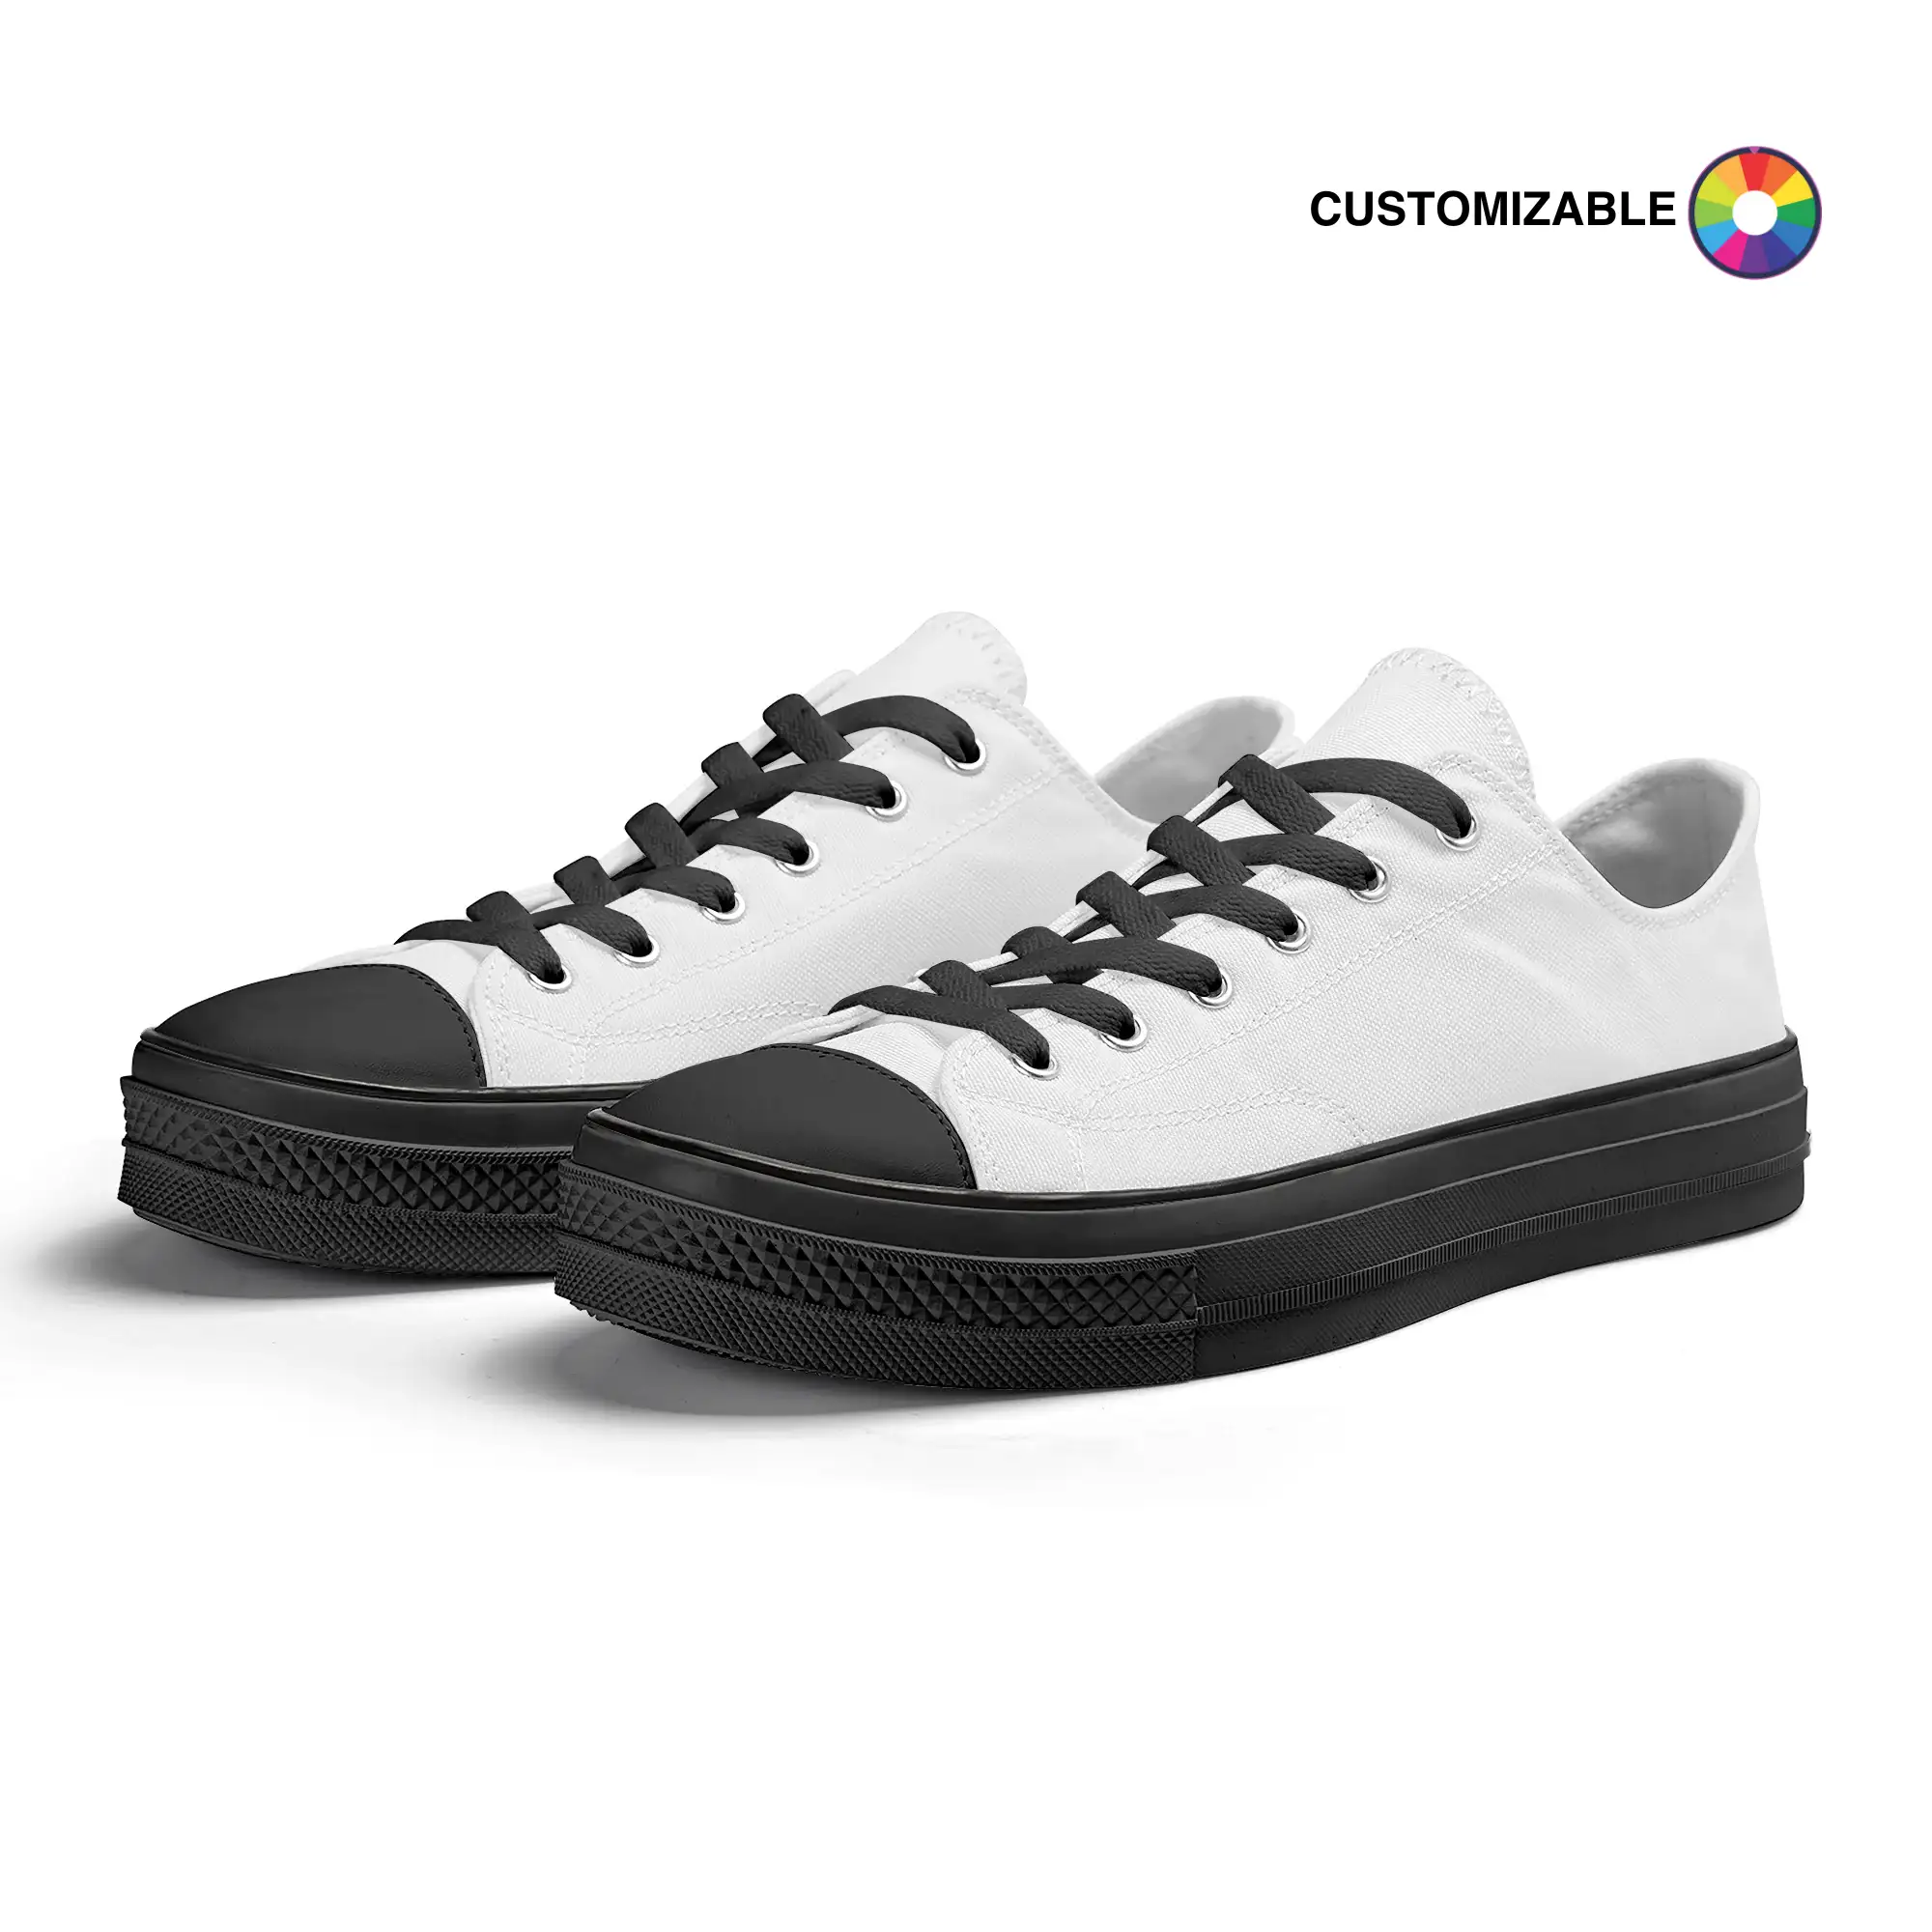 Customizable Black Low Top Shoe